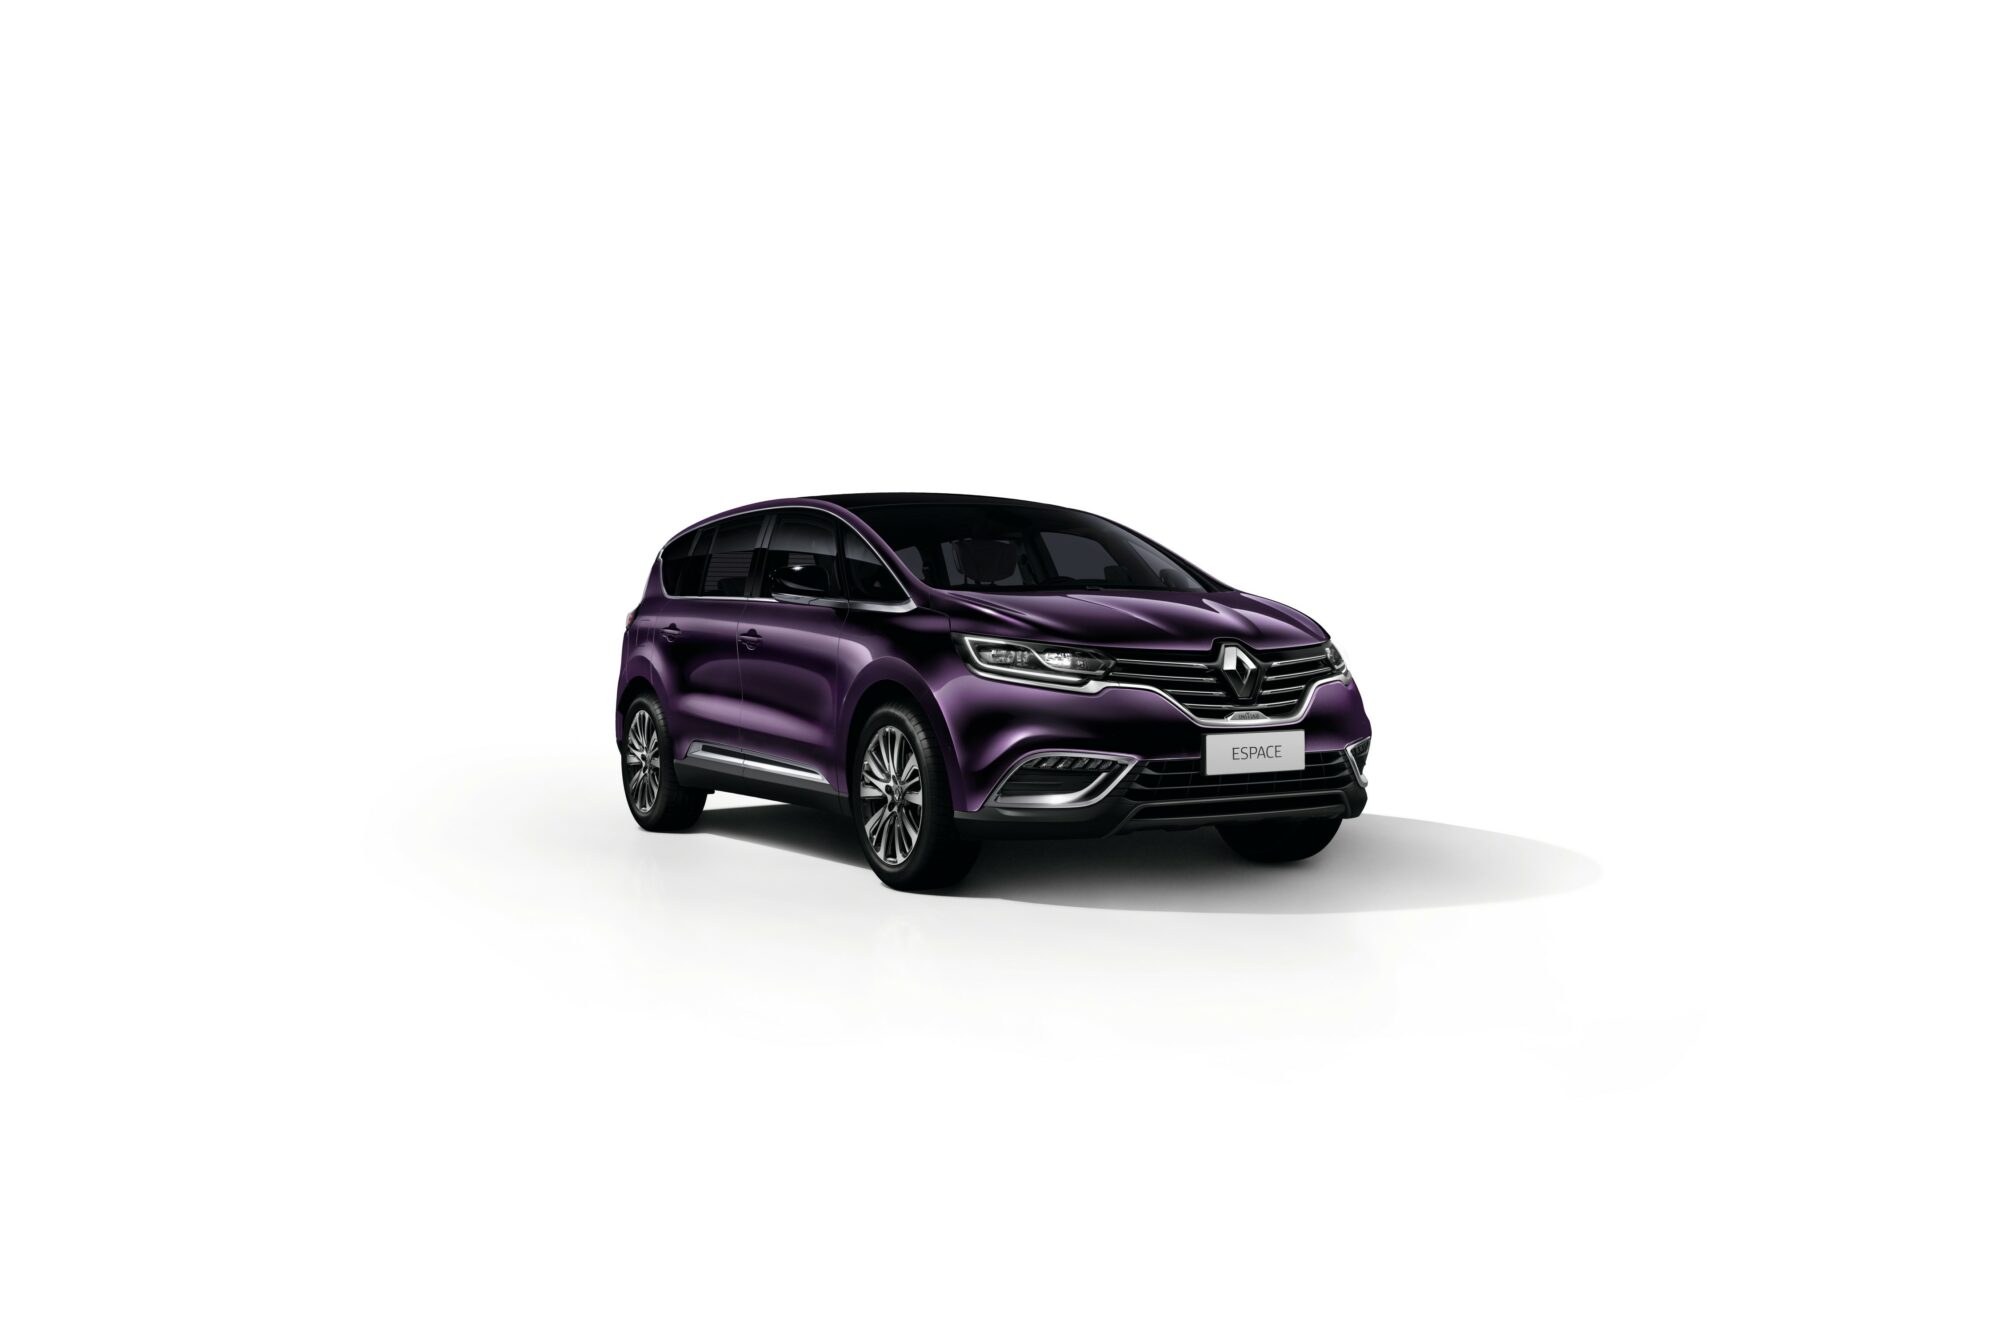 2017 - New Renault ESPACE INITIALE PARIS China version